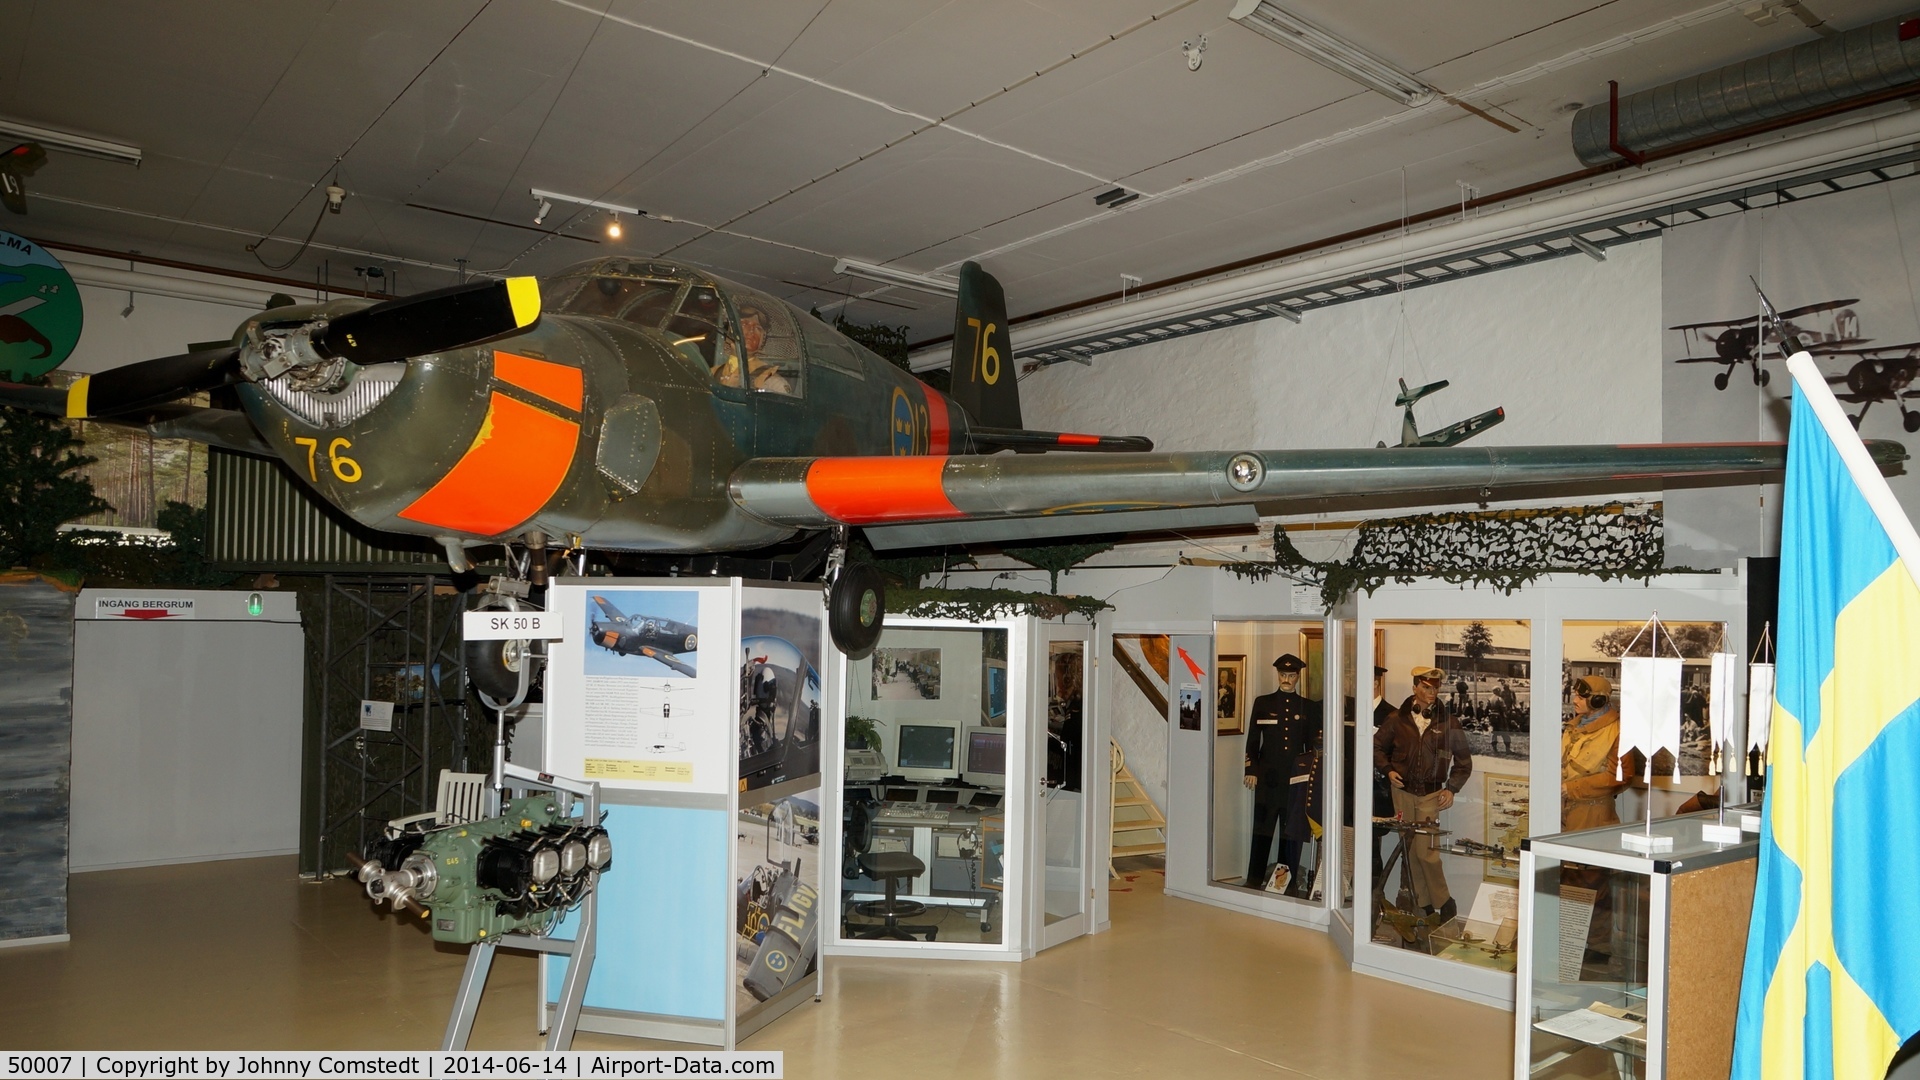 50007, Saab Sk.50B Safir C/N 91-207, Sk 50B marked F13-76 in Ängelholm Aviation Museum, Sweden